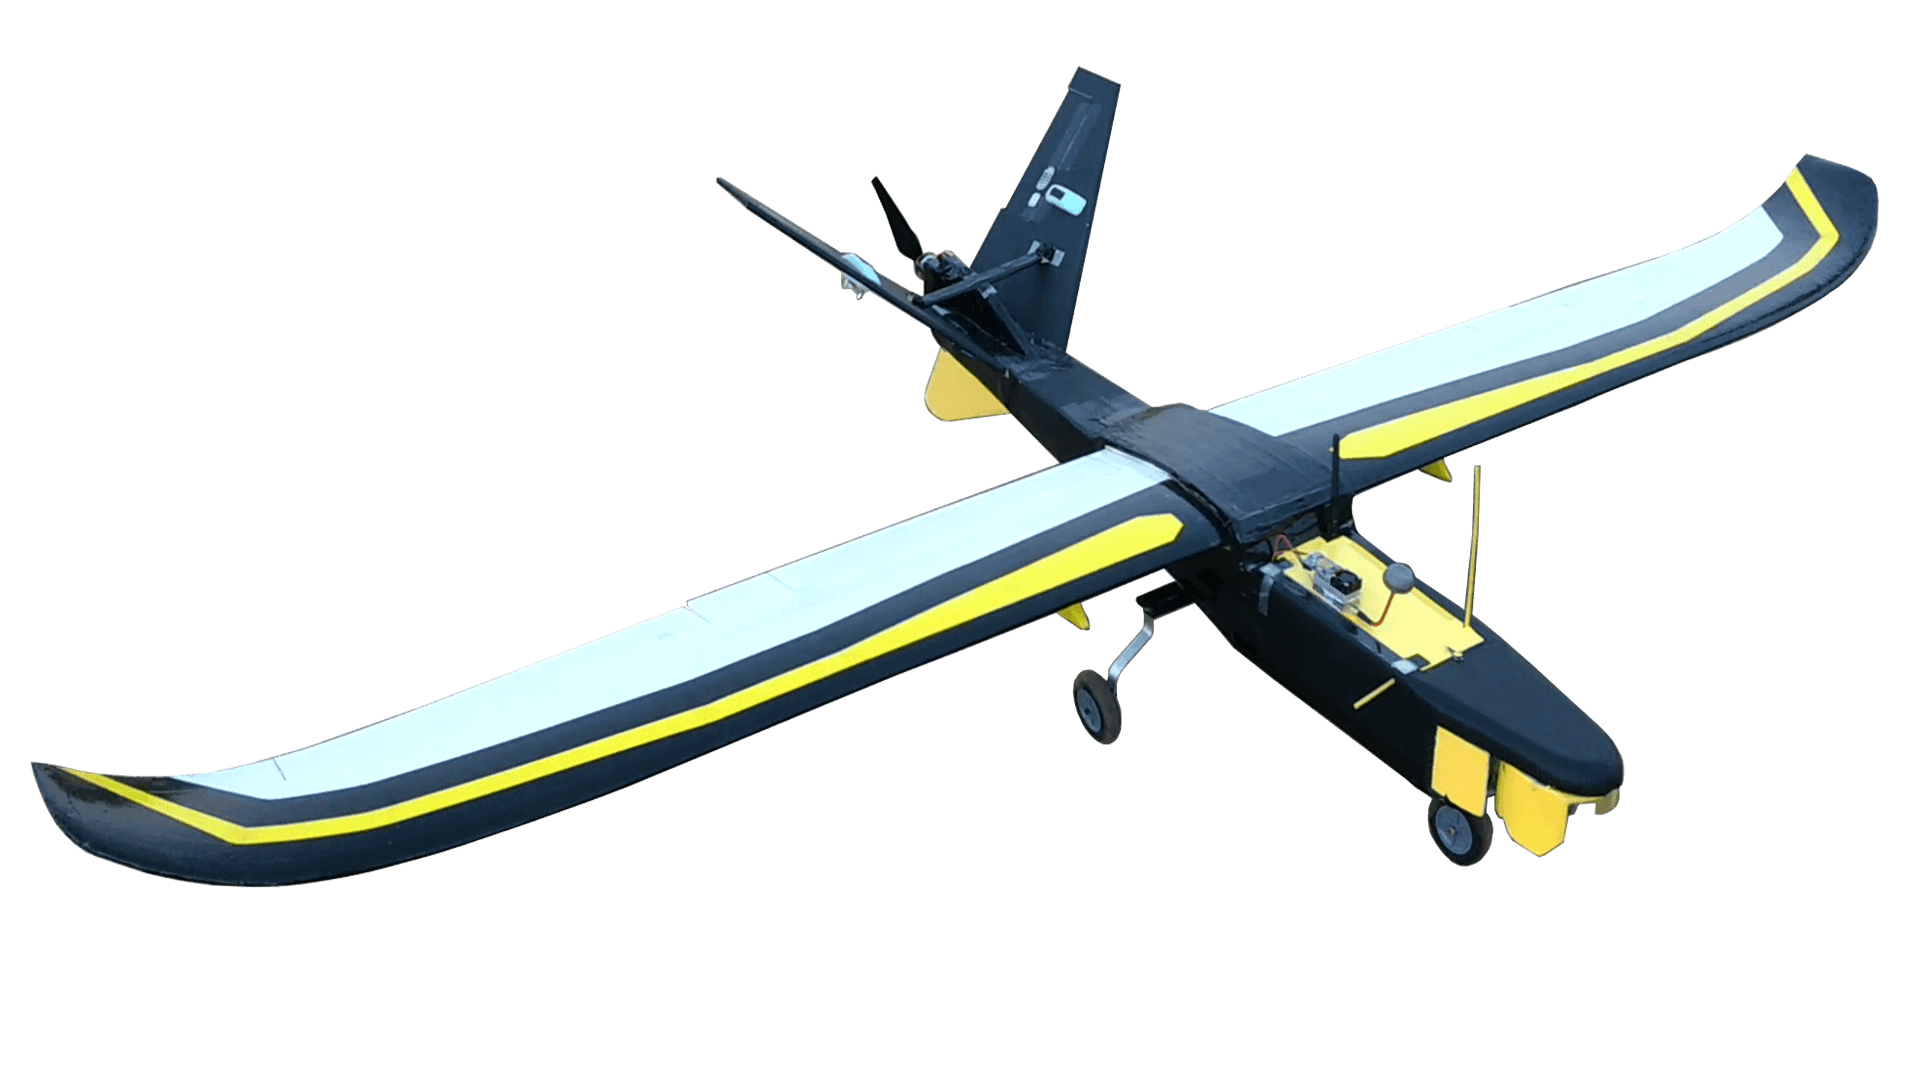 Dronobotics Flightmare UAV -MAKE IN INDIA